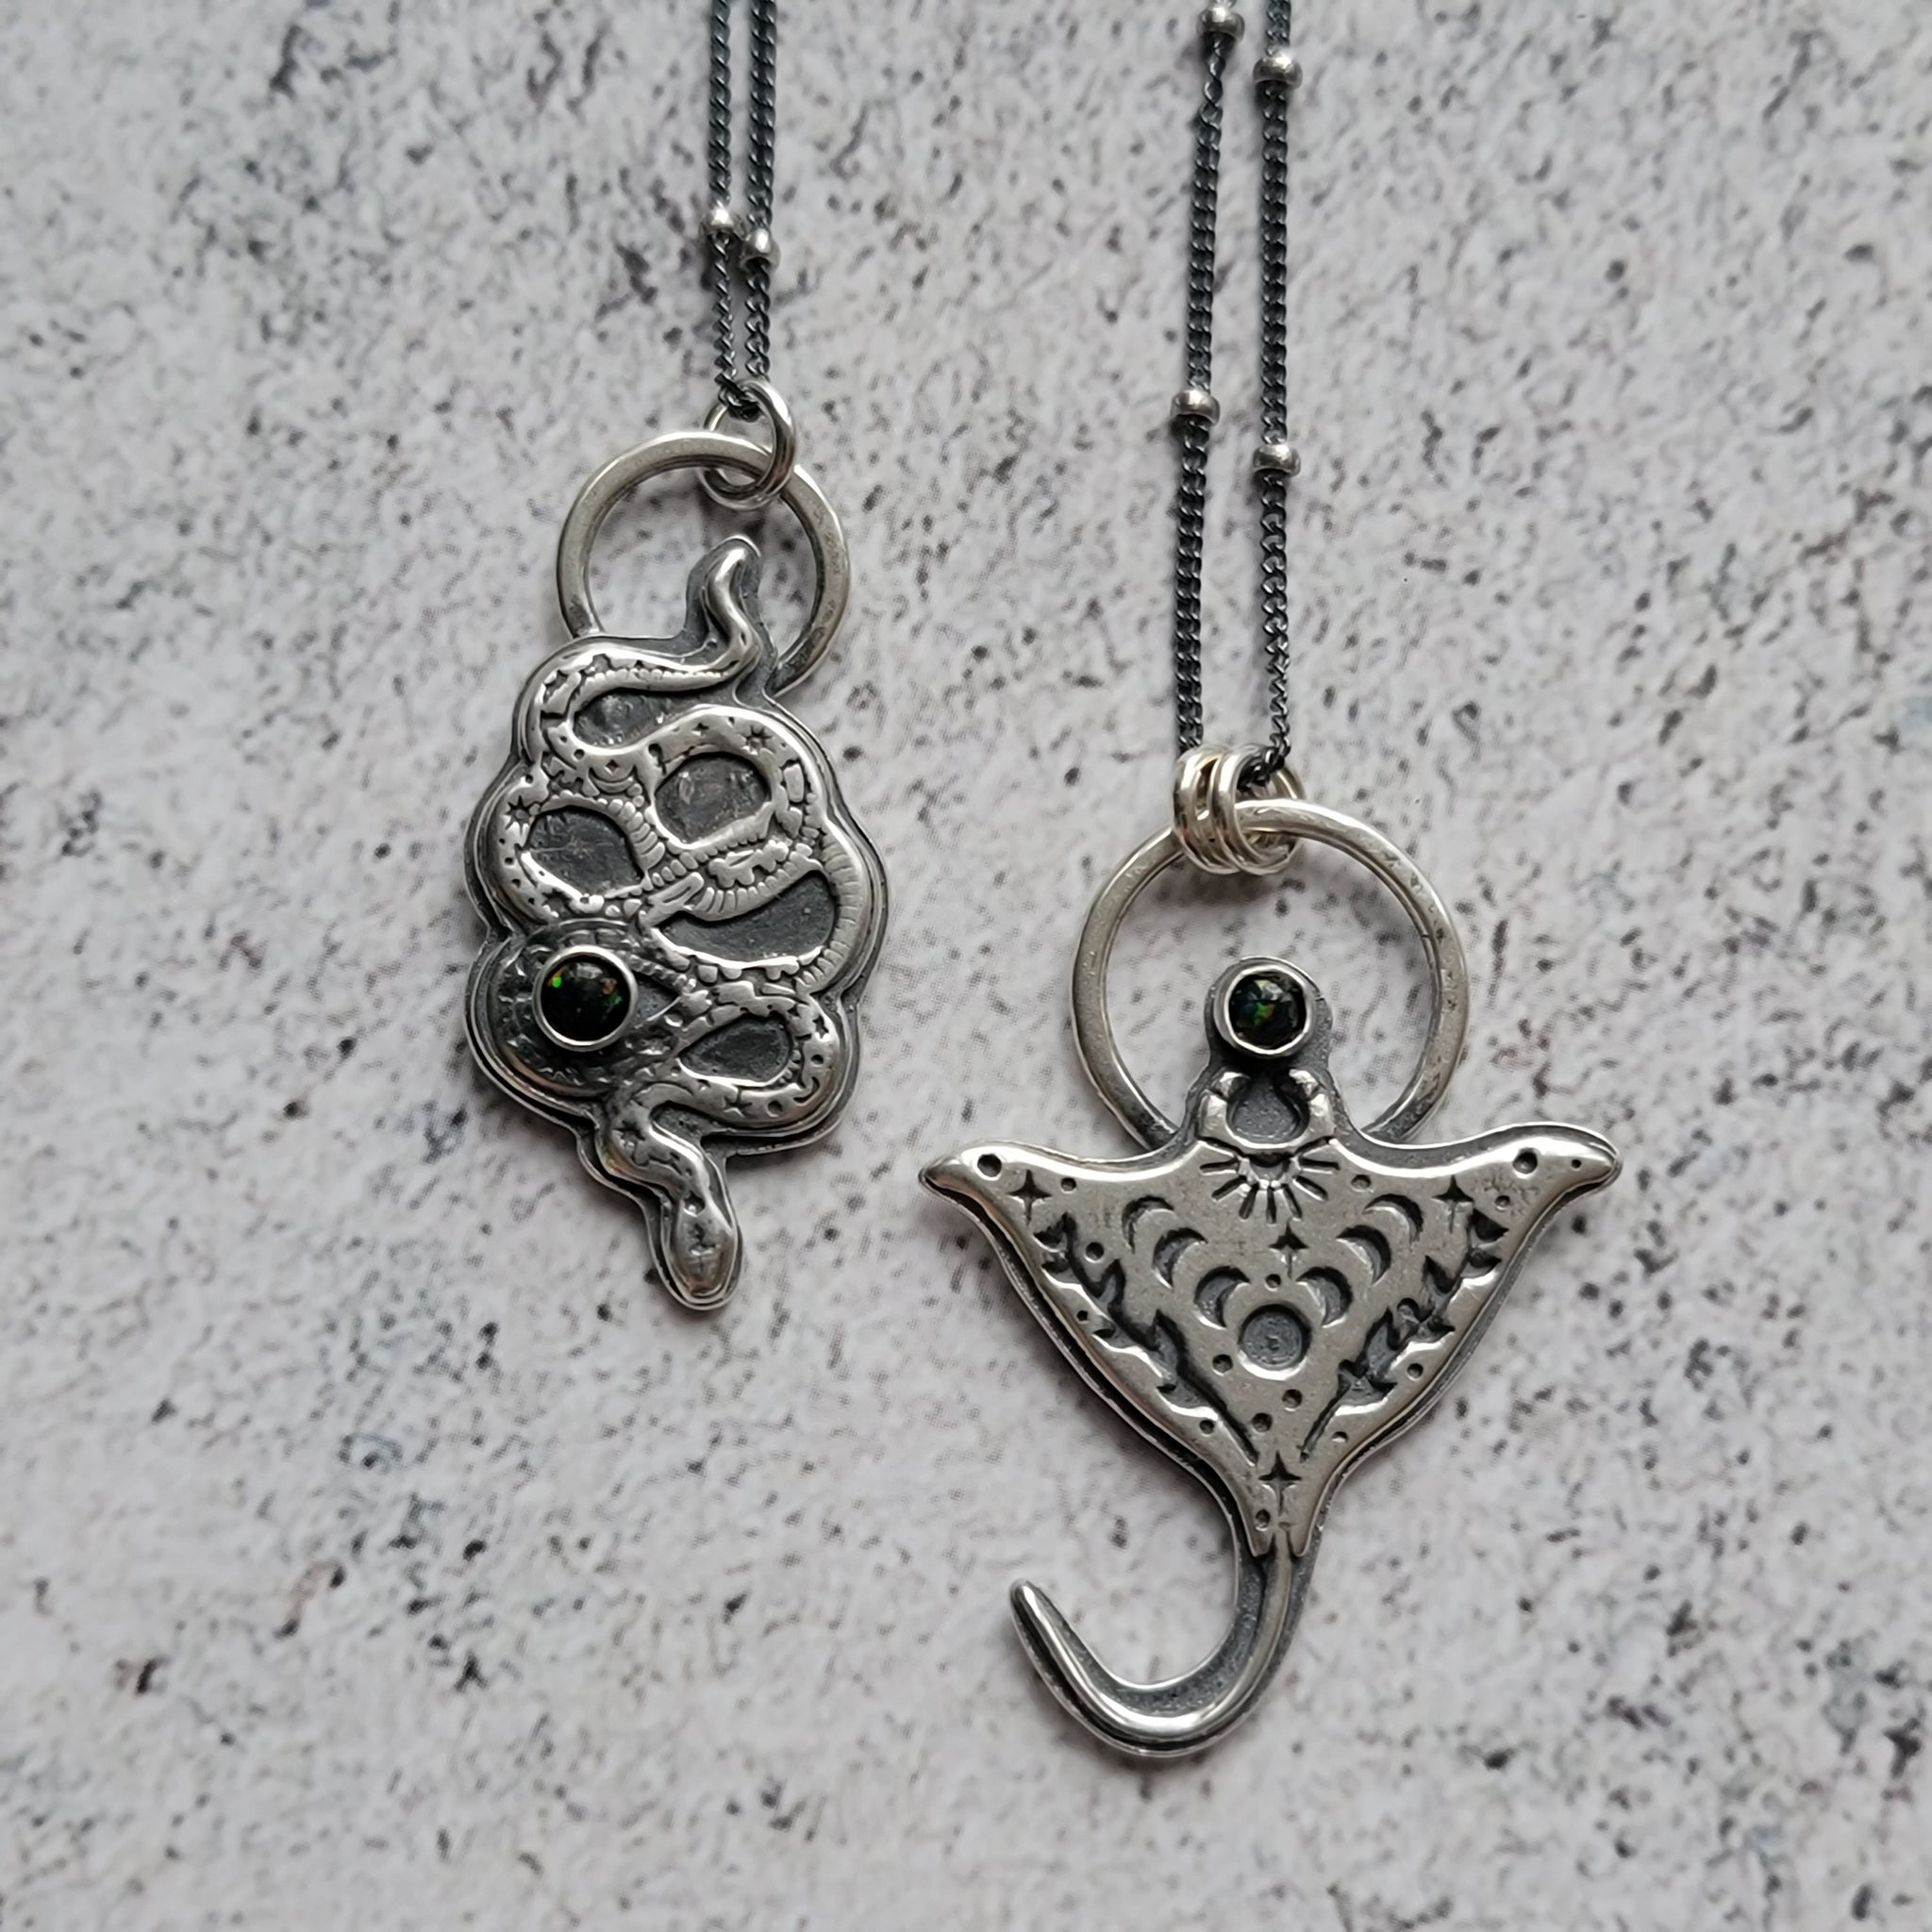 Celestial Garden Snake Pendant in Sterling Silver Silver with Black Opal